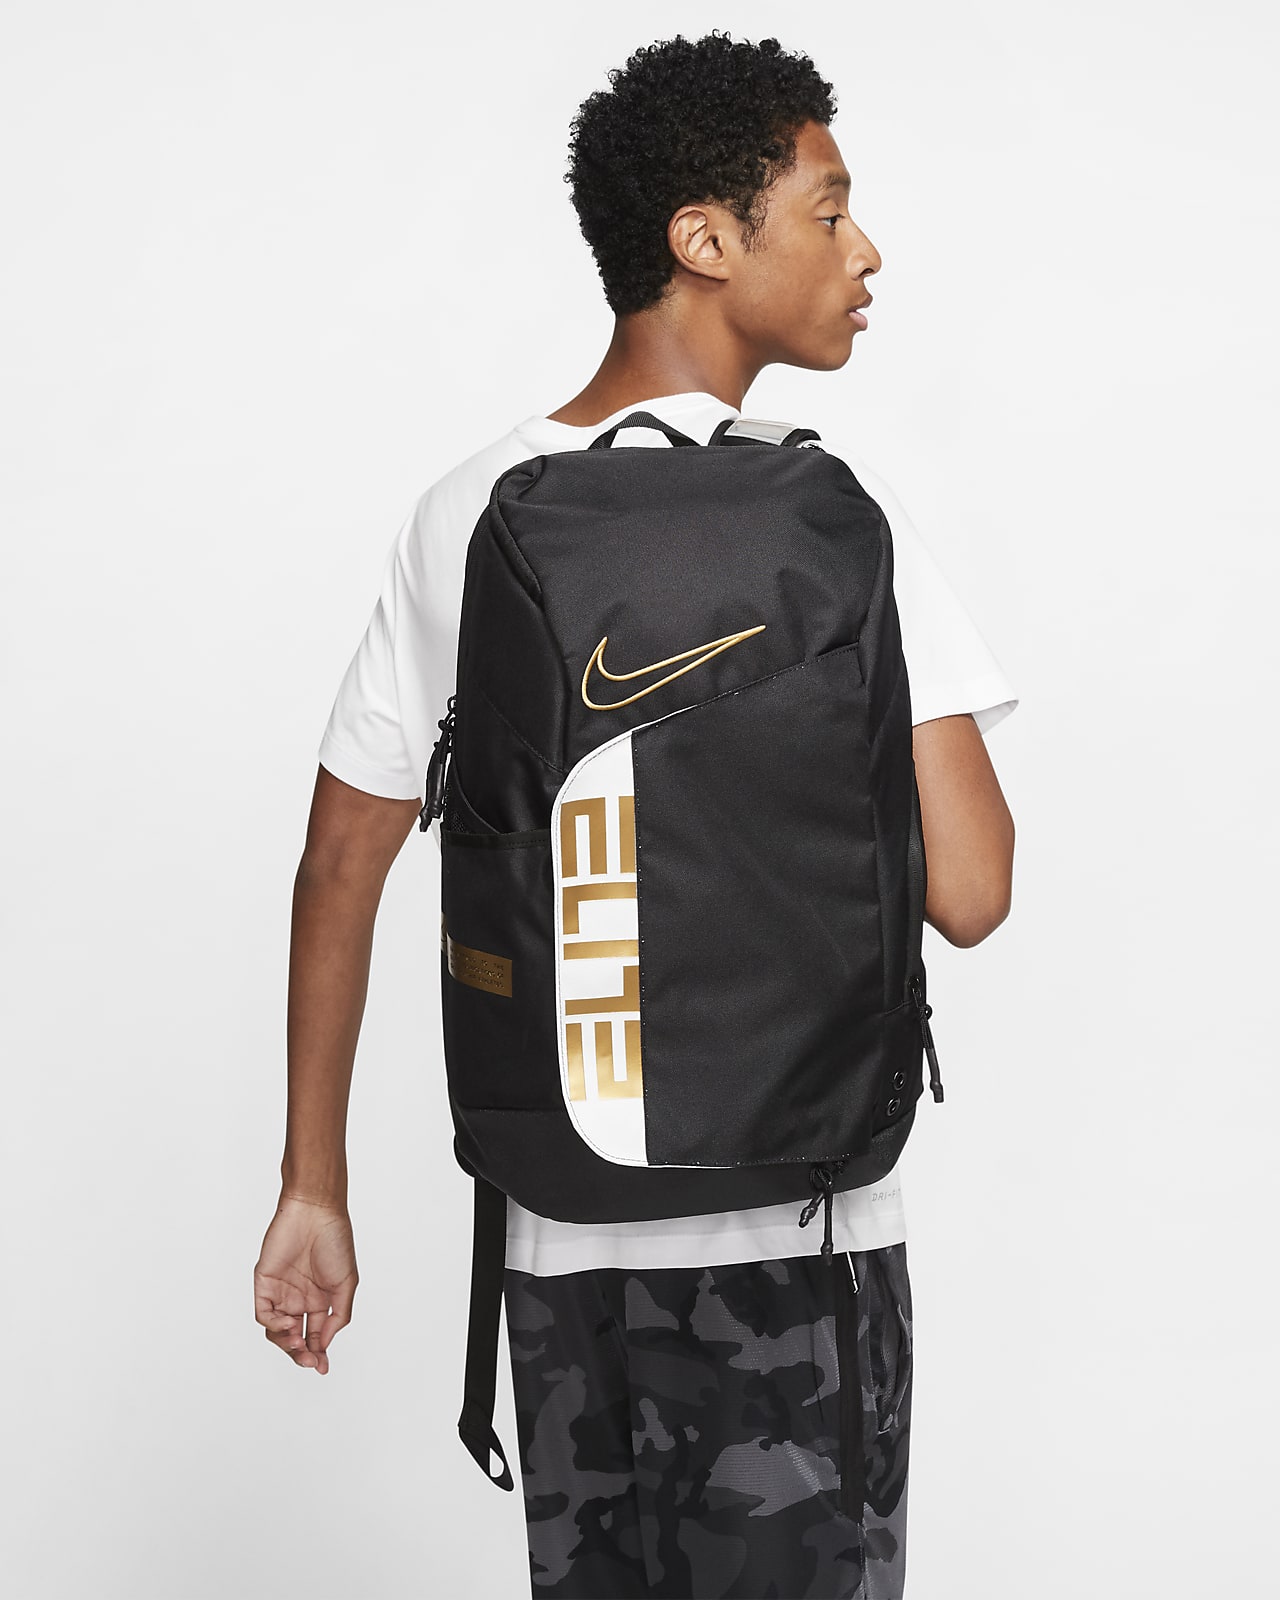 Nike Elite Pro Basketball Backpack (32L) GOLD - munimoro.gob.pe